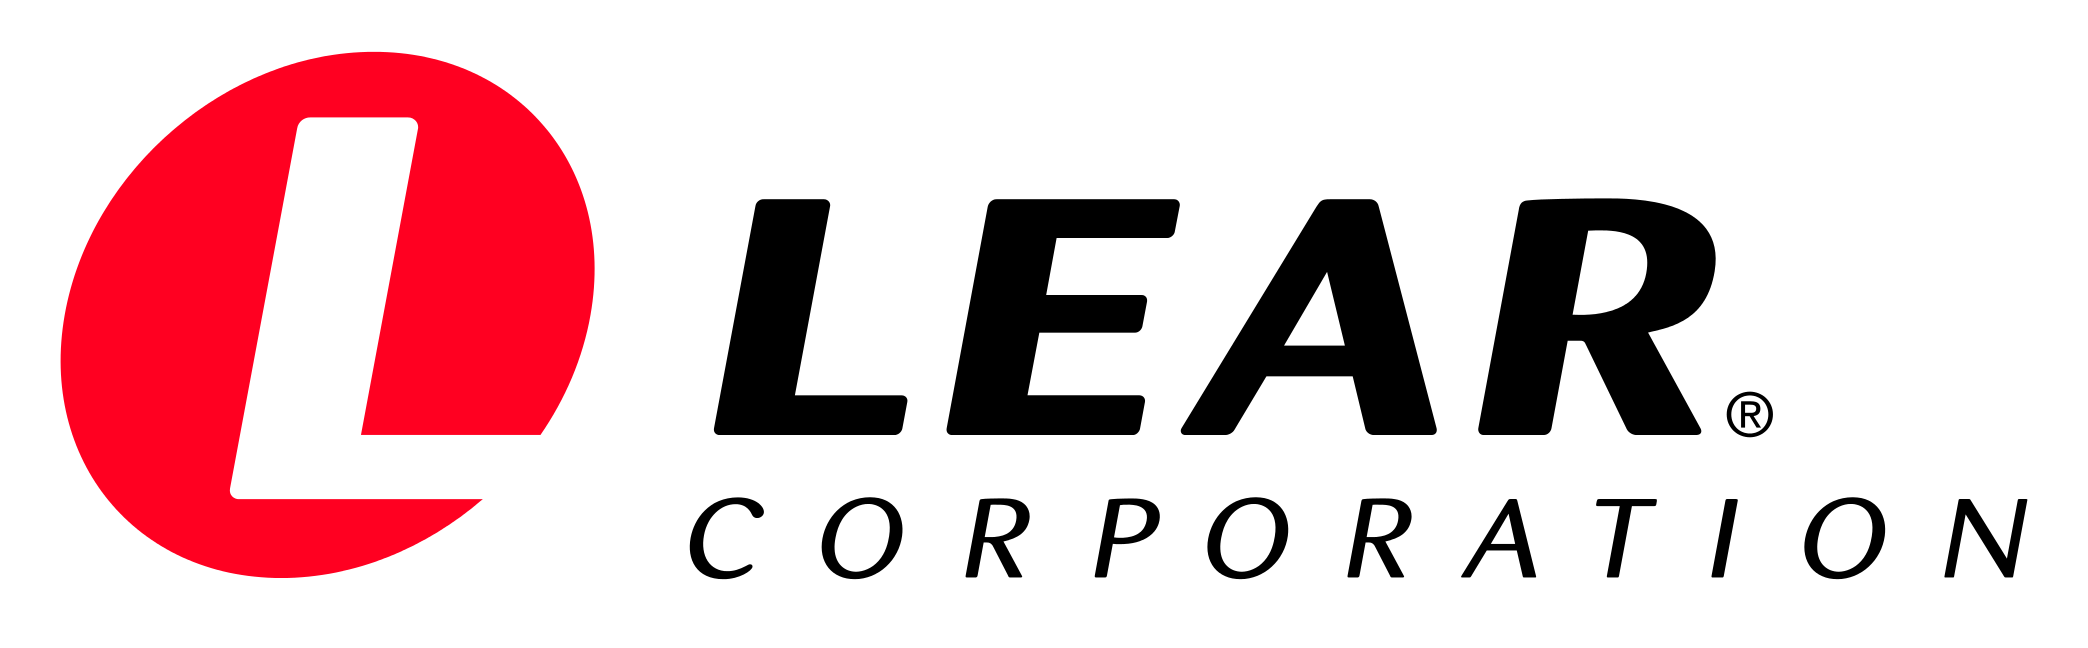 Lear Logo PNG Image